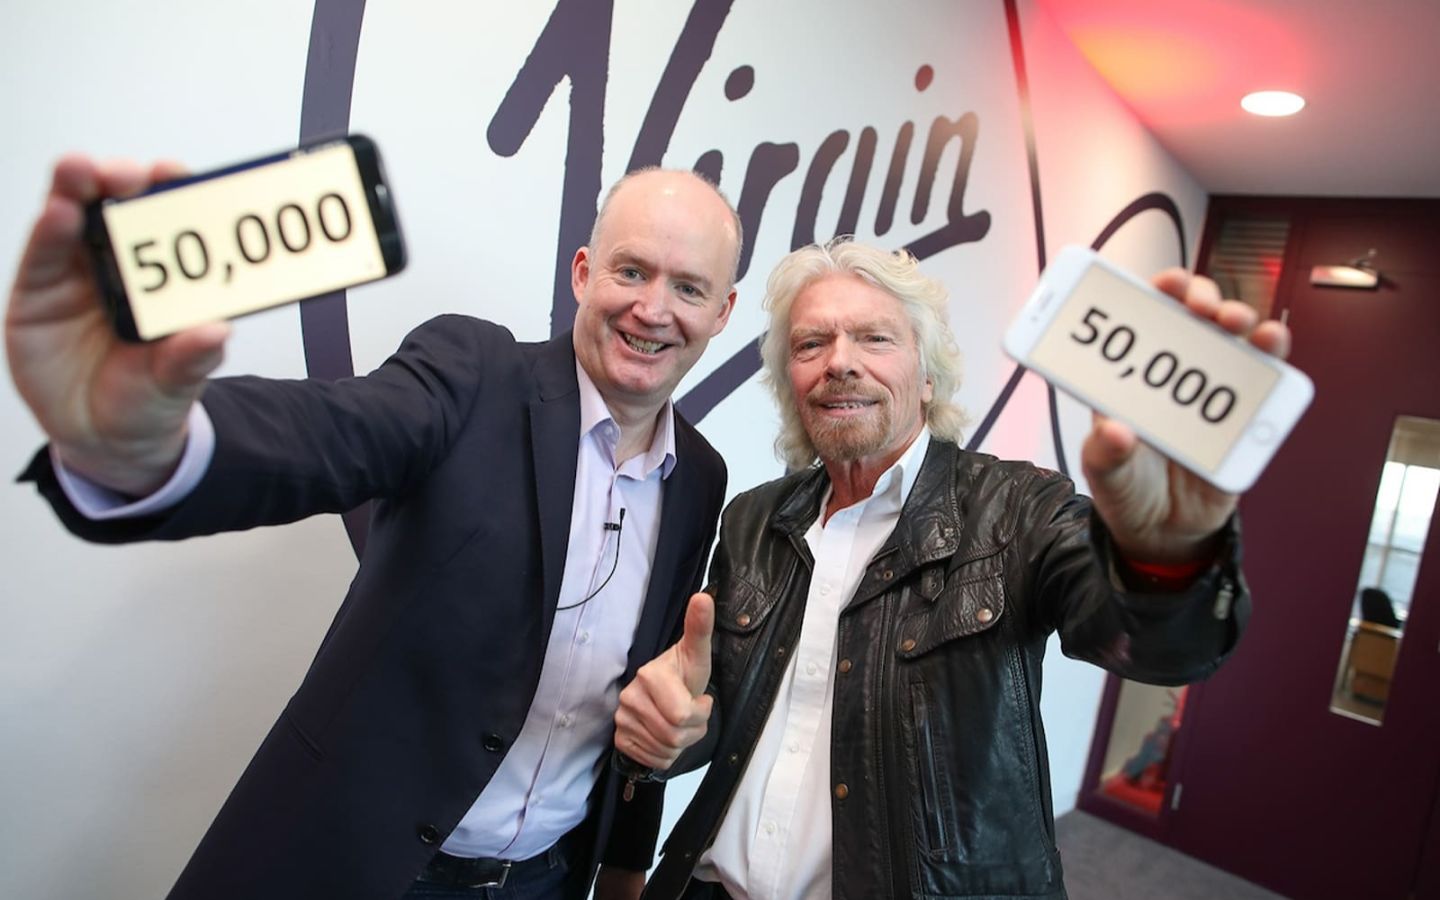 Richard Branson and Tony Hanway, CEO of Virgin Media Ireland, celebrate the 50,000th mobile customer